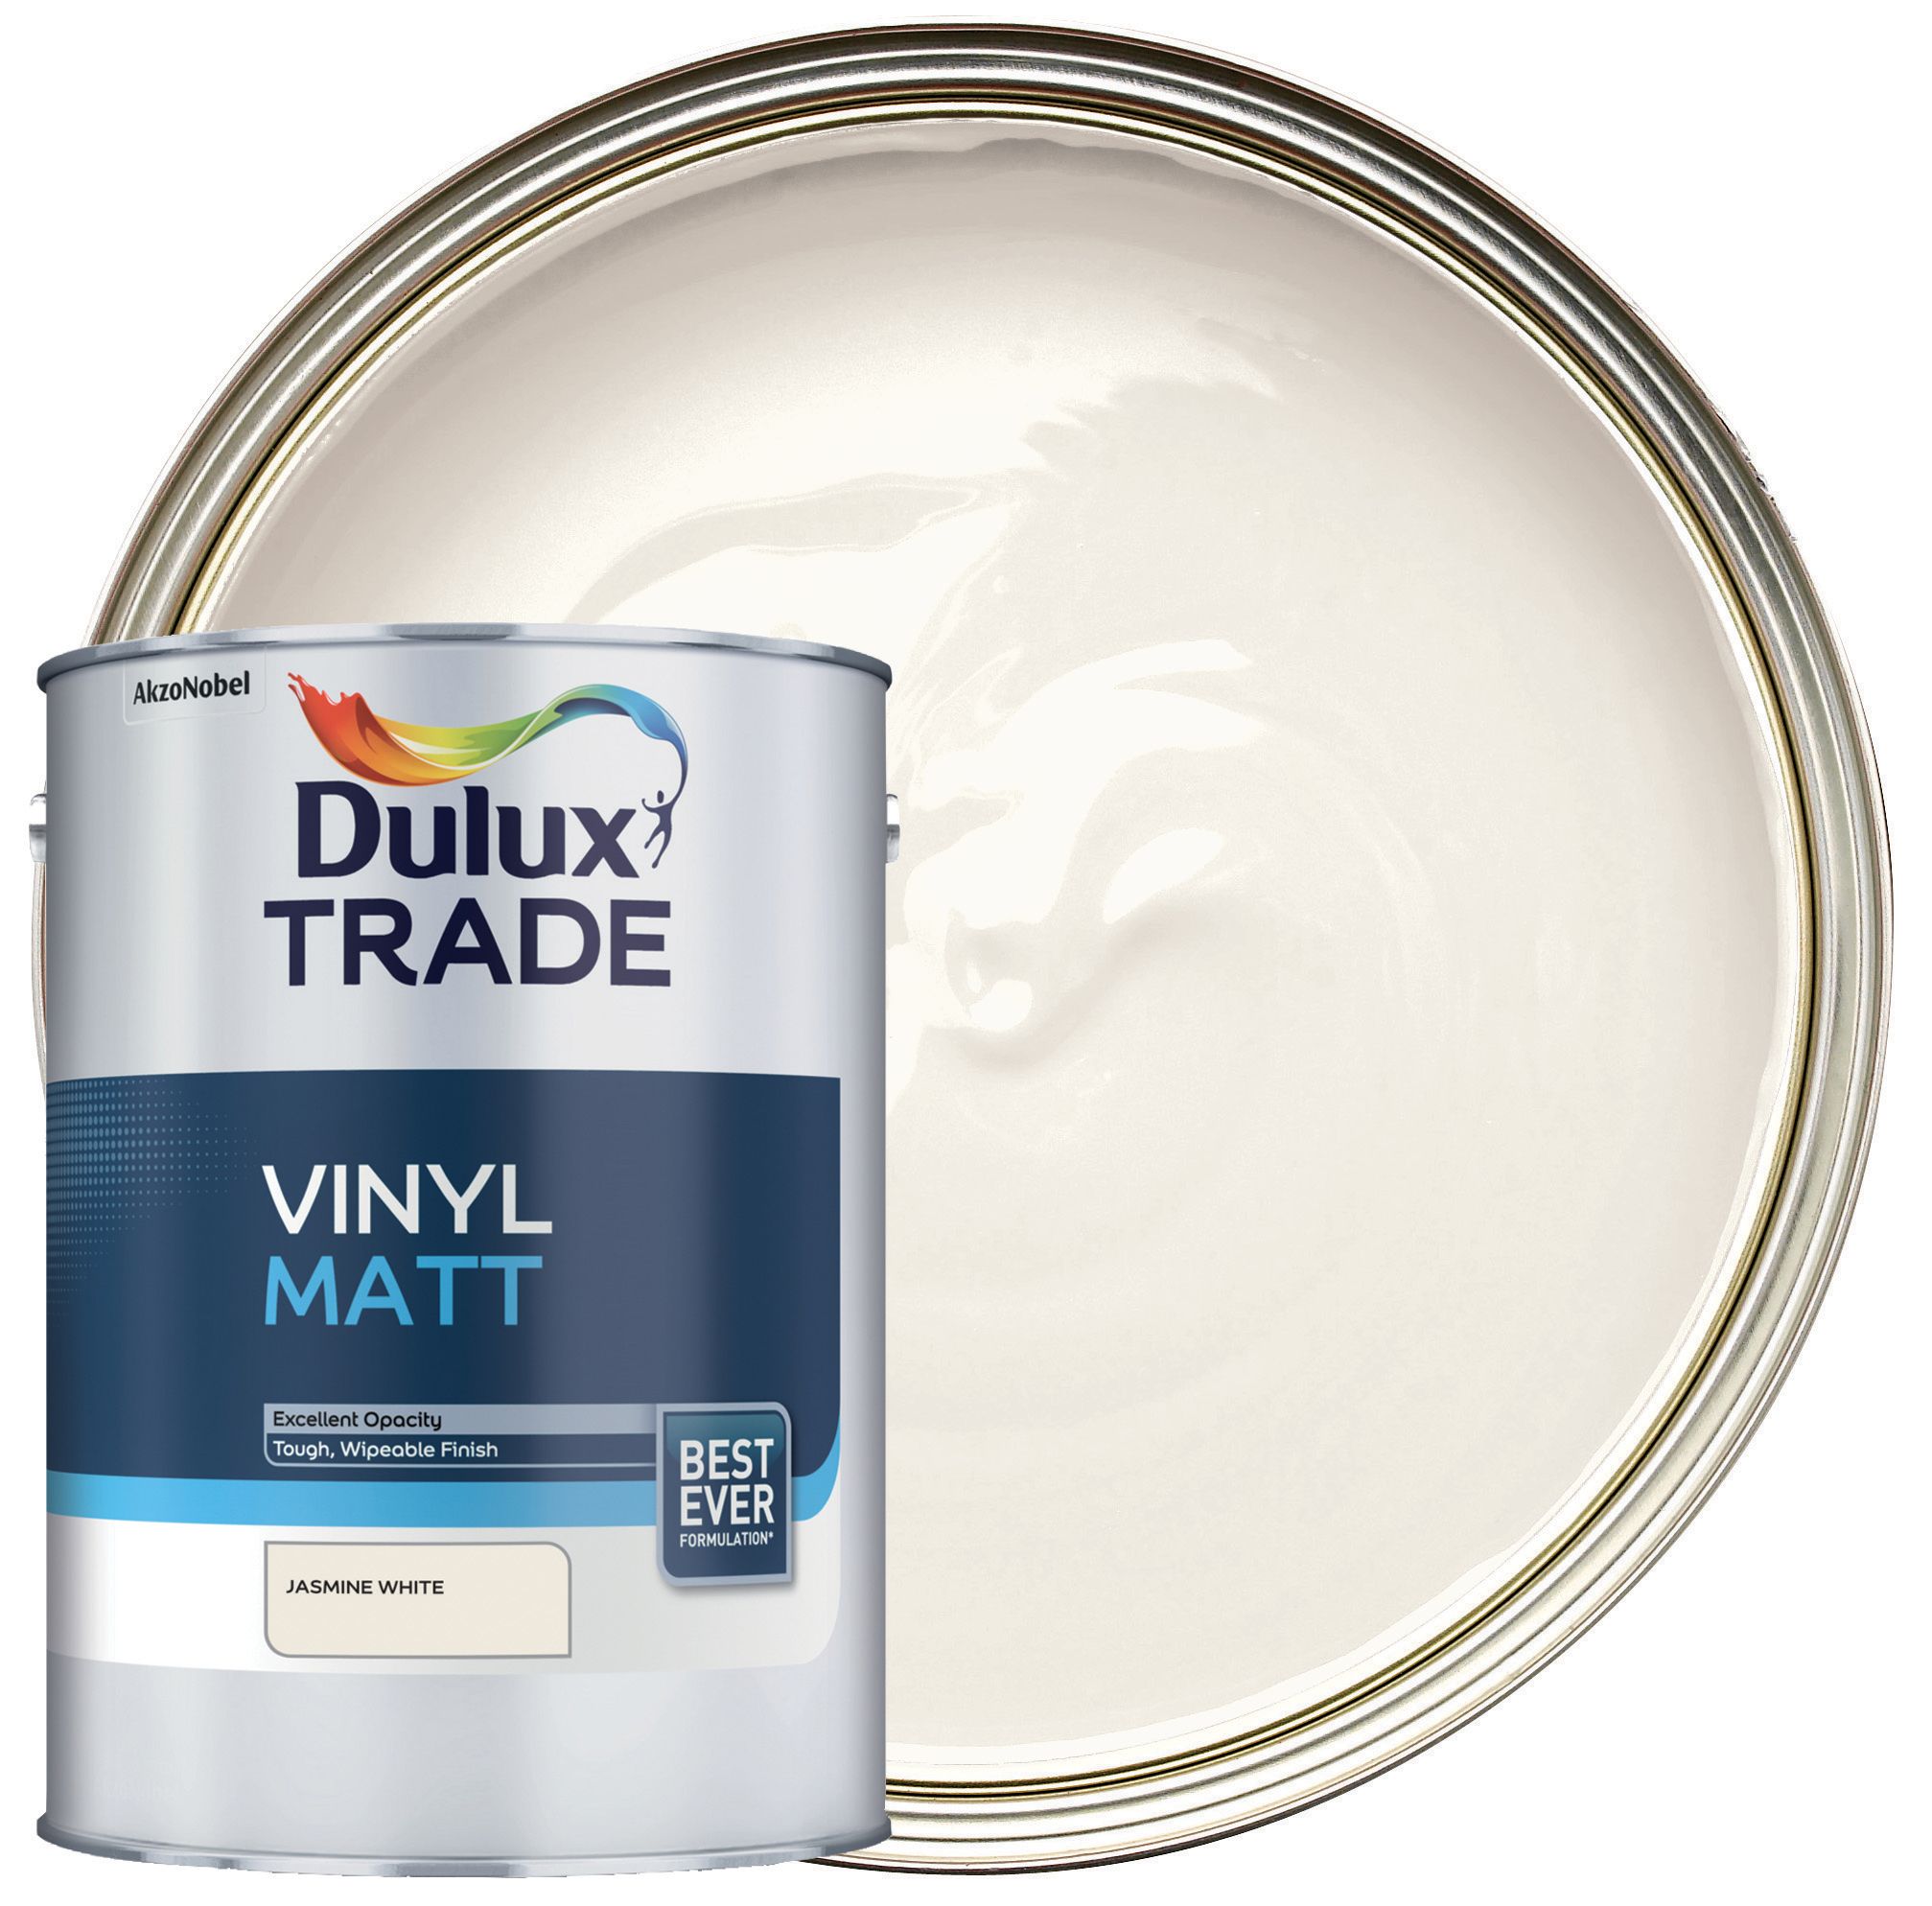 Dulux Trade Vinyl Matt Emulsion Paint - Jasmine White - 5L